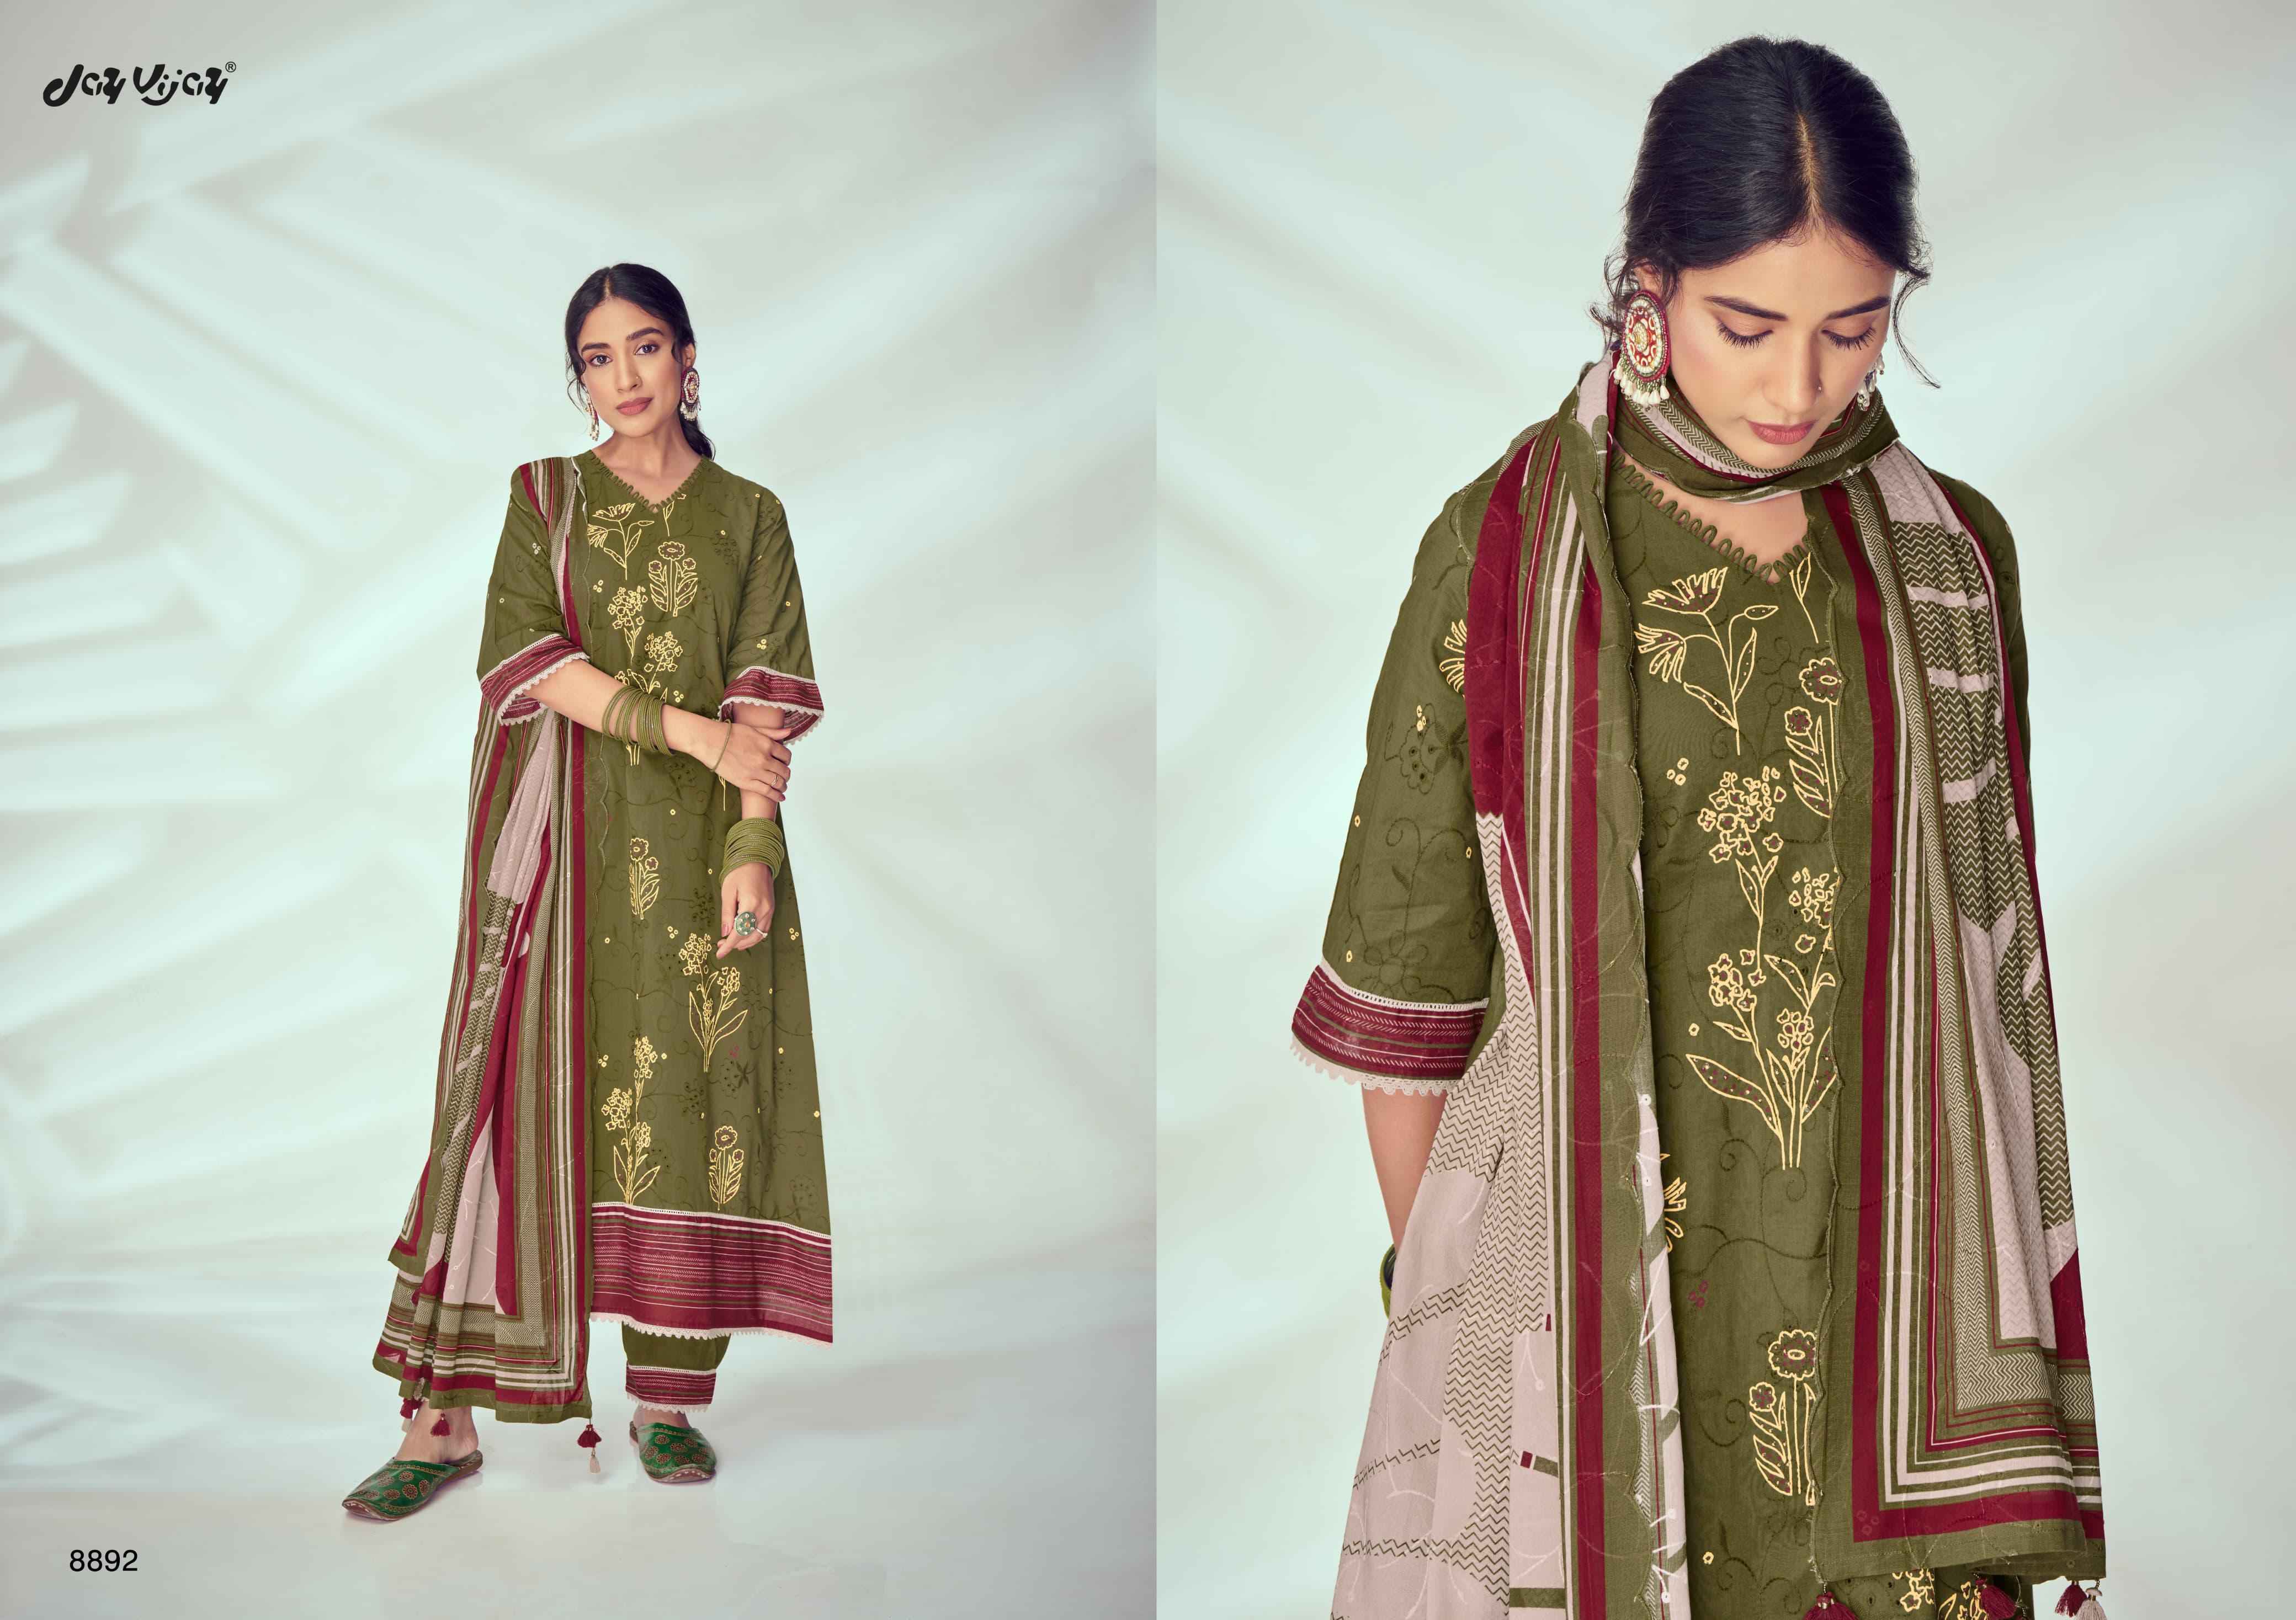 Jay Vijay Kahani Pure Cotton Dress Material (6 Pc Catalouge)